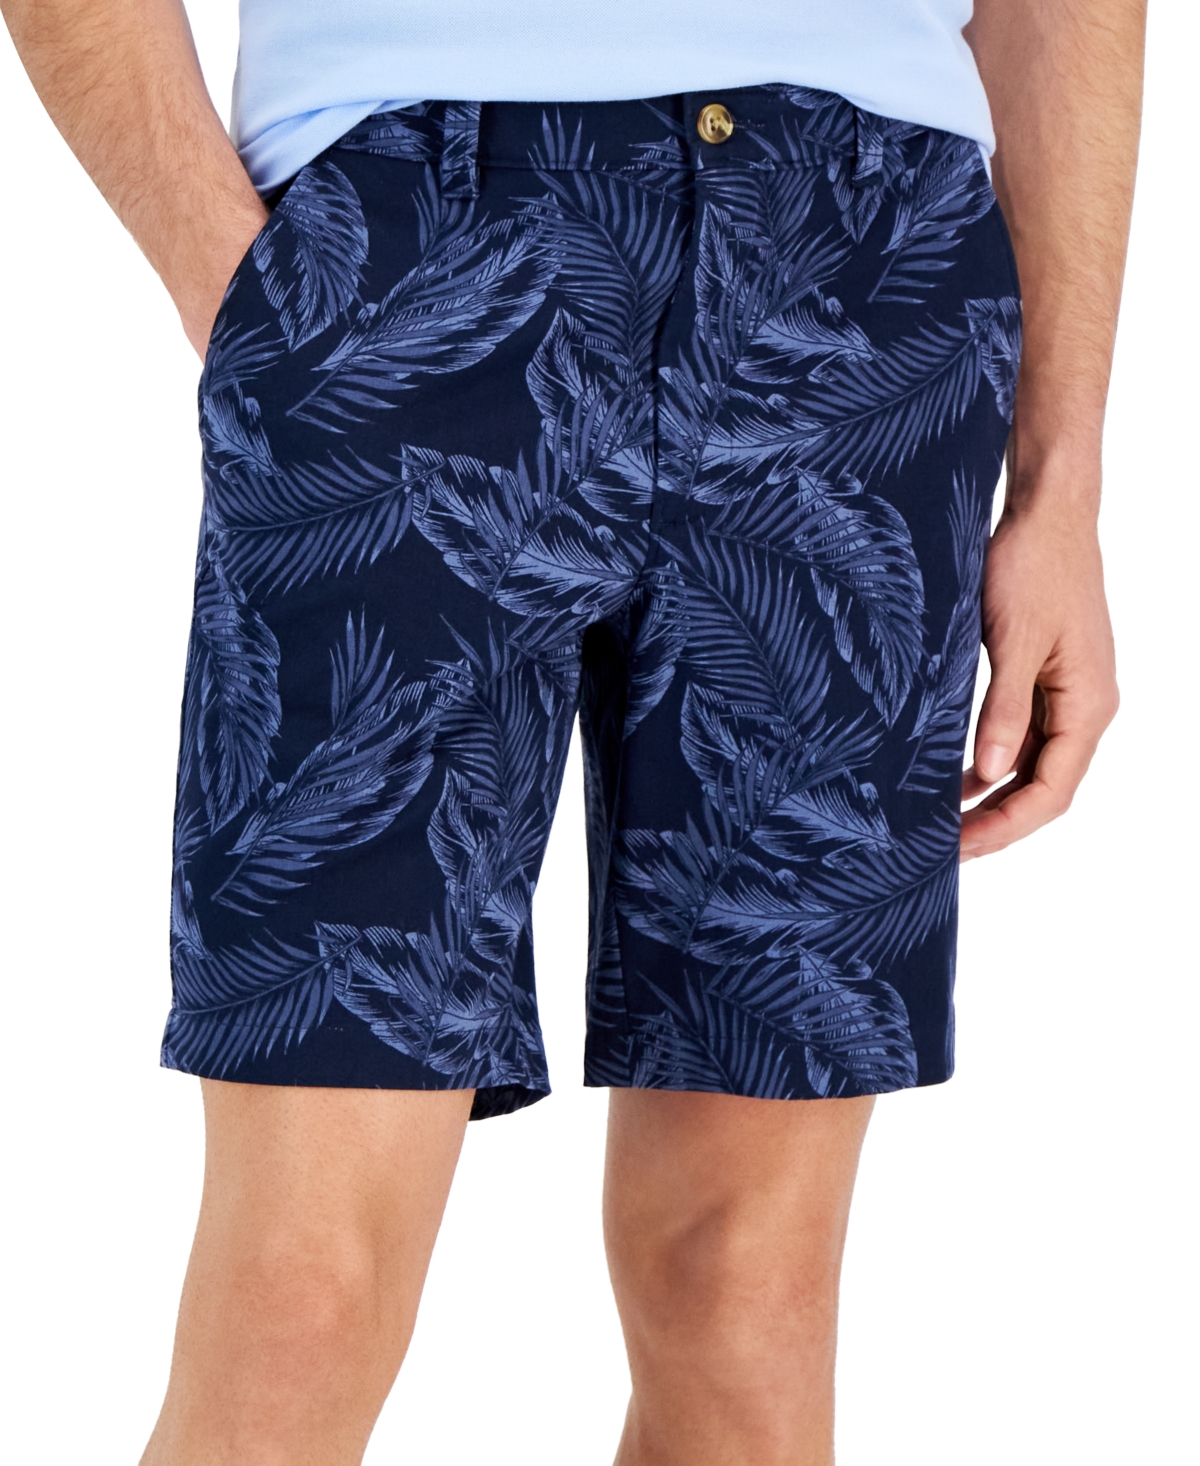 Men's Lena Leaf Print 9" Shorts, Created for Macy's - Navy Blue